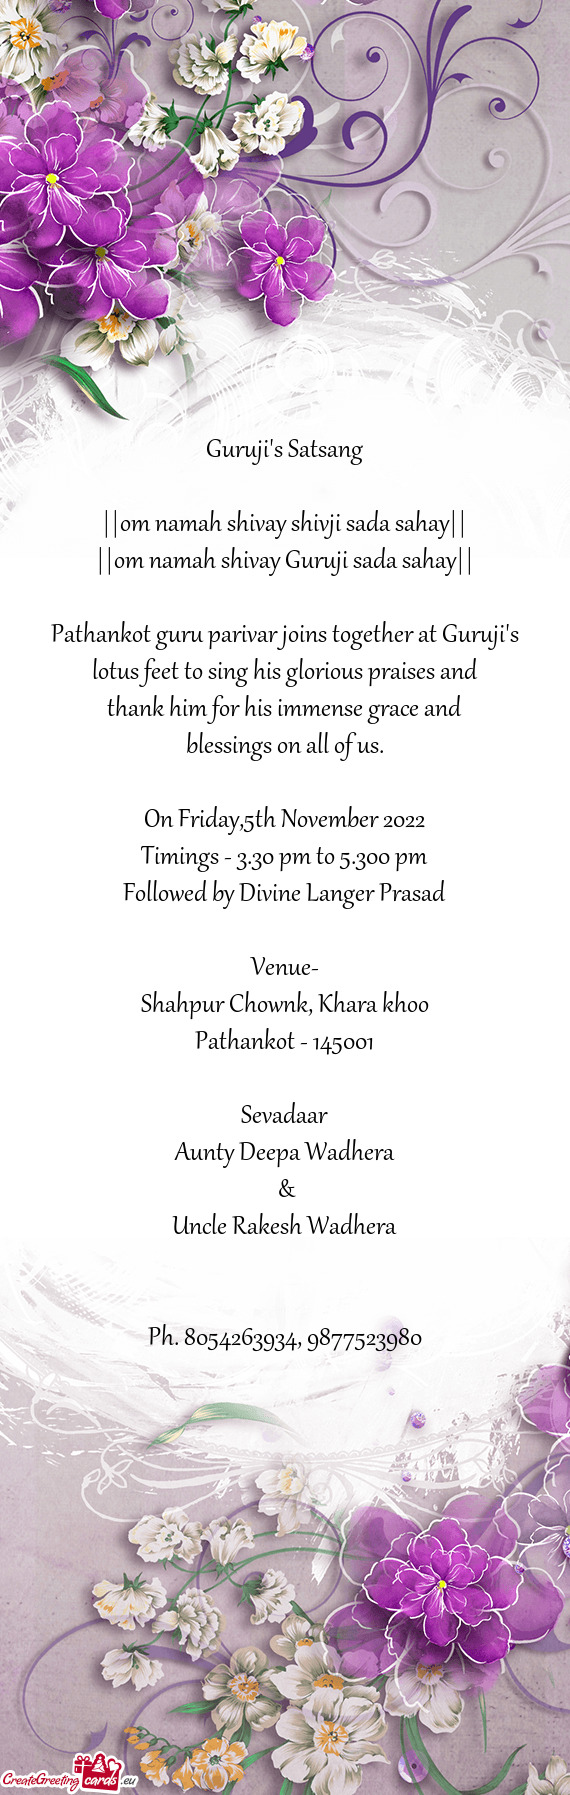 Pathankot guru parivar joins together at Guruji